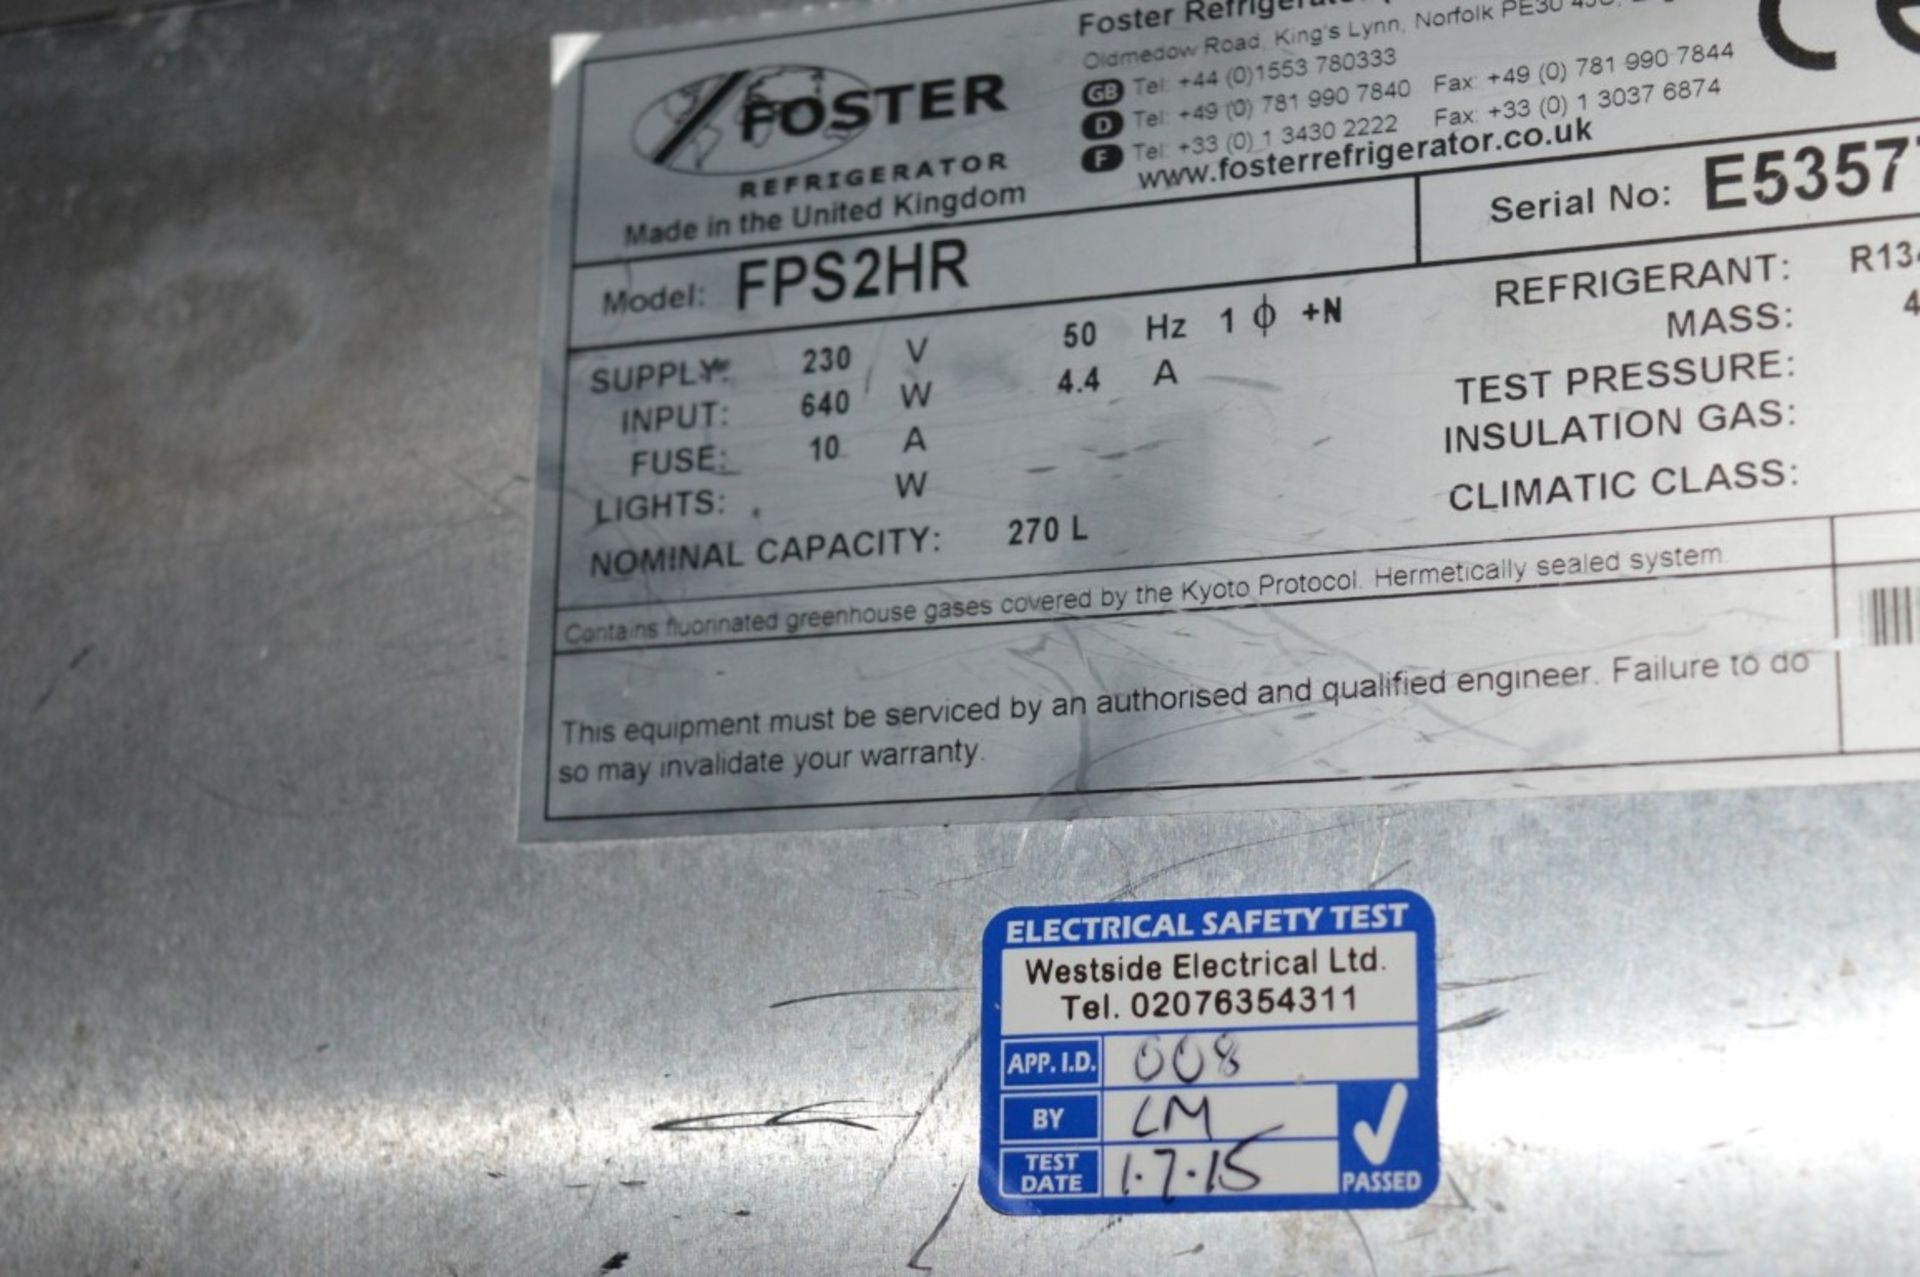 1 x Foster FPS 2HR 2 Door Saladette Refridgerator/Counter - Model: FPS 2HR - Stainless Steel - Image 4 of 4